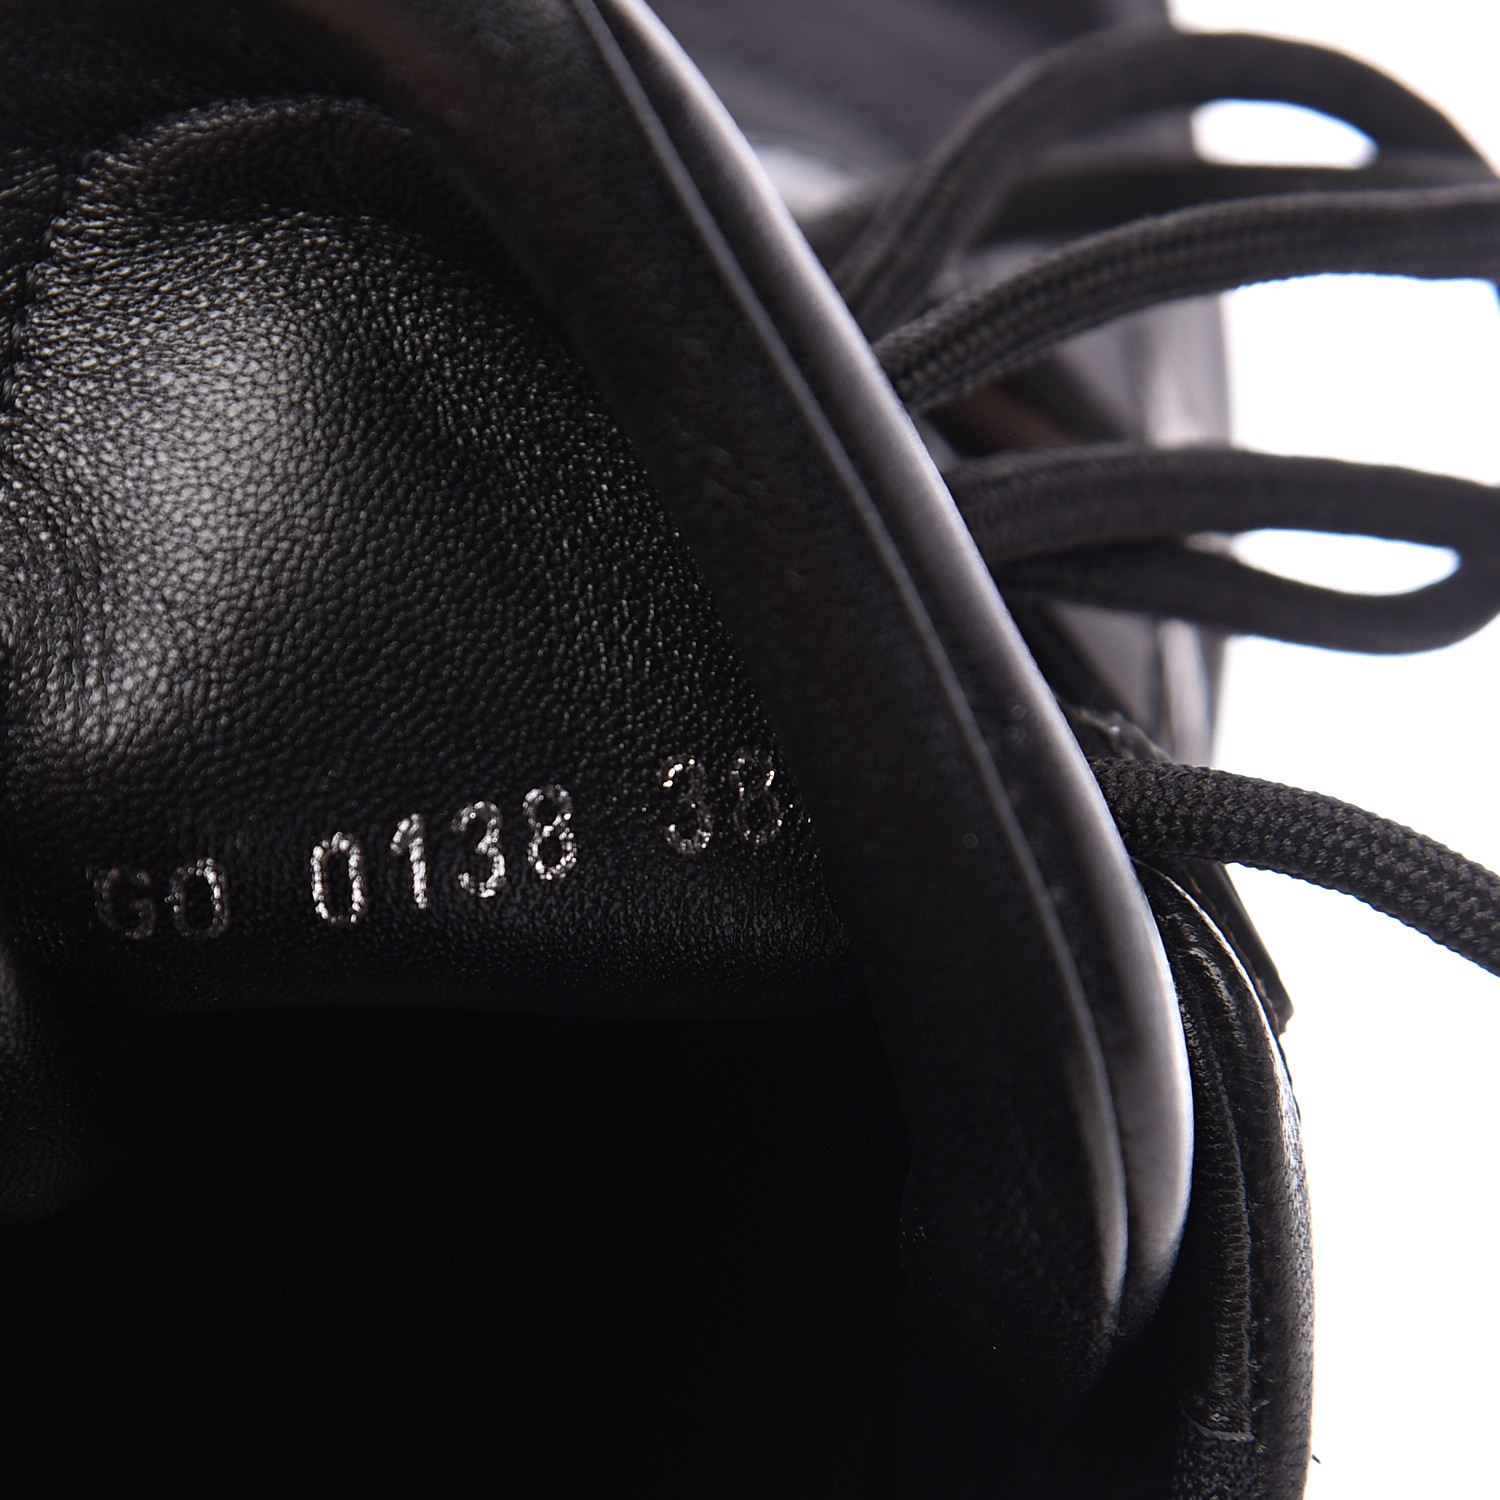 LOUIS VUITTON Patent Monogram LV Archlight Sneakers 38.5 Black 561790